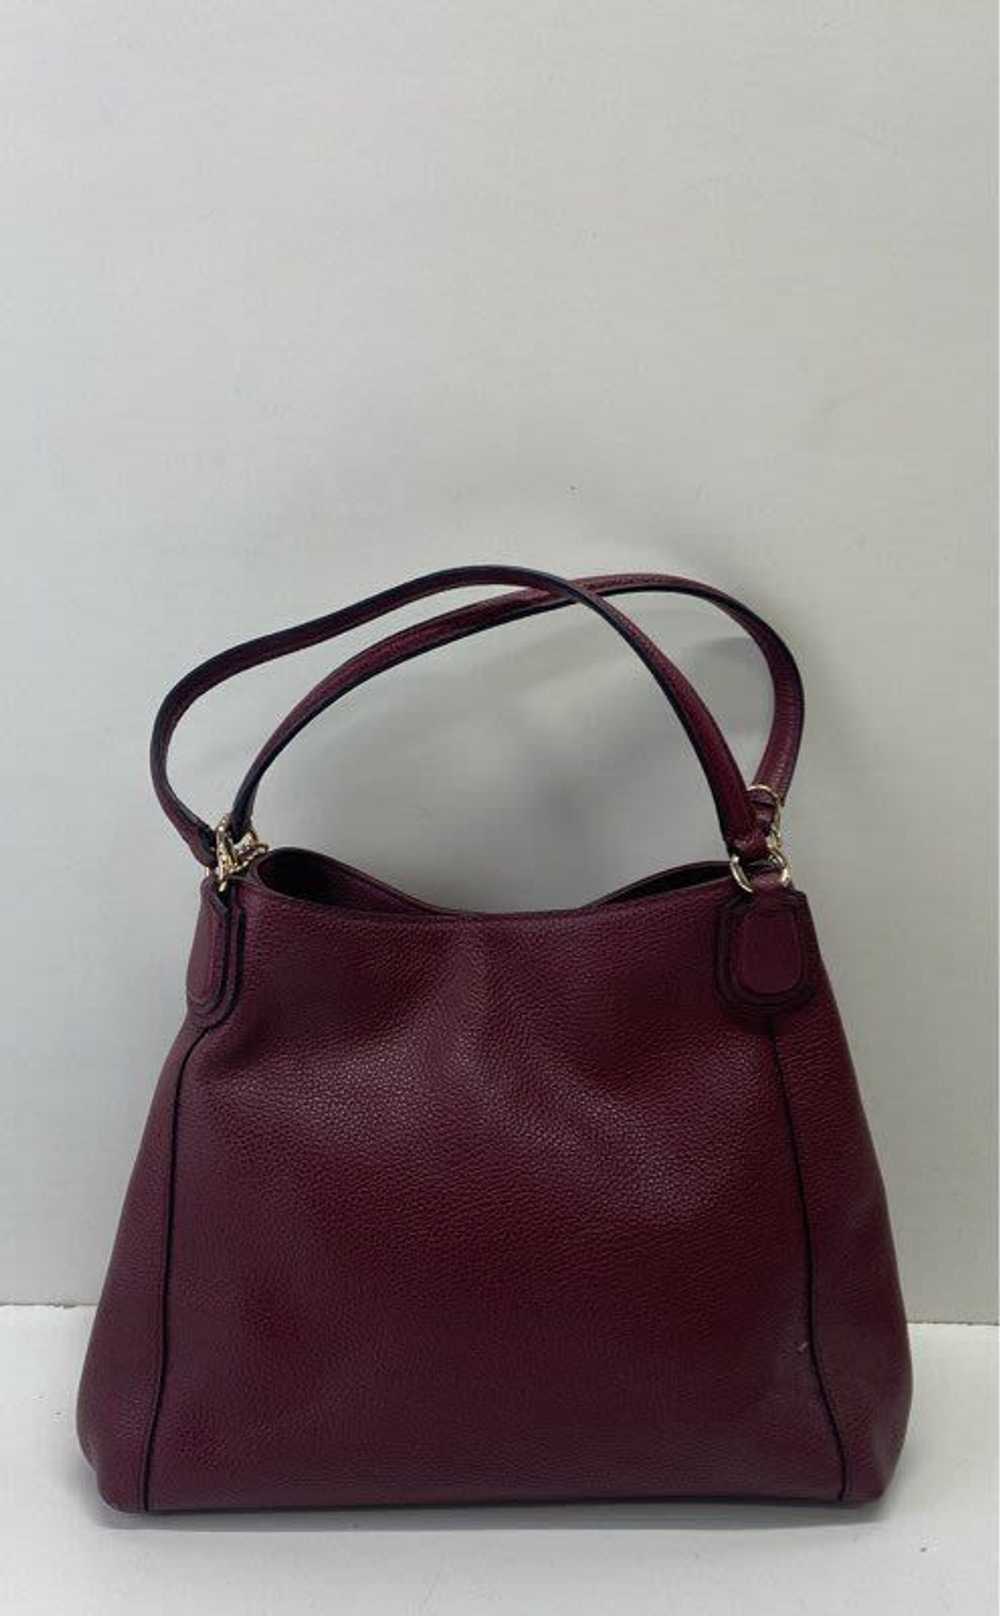 COACH Edie Burgundy Pebbled Leather Satchel Bag - image 2